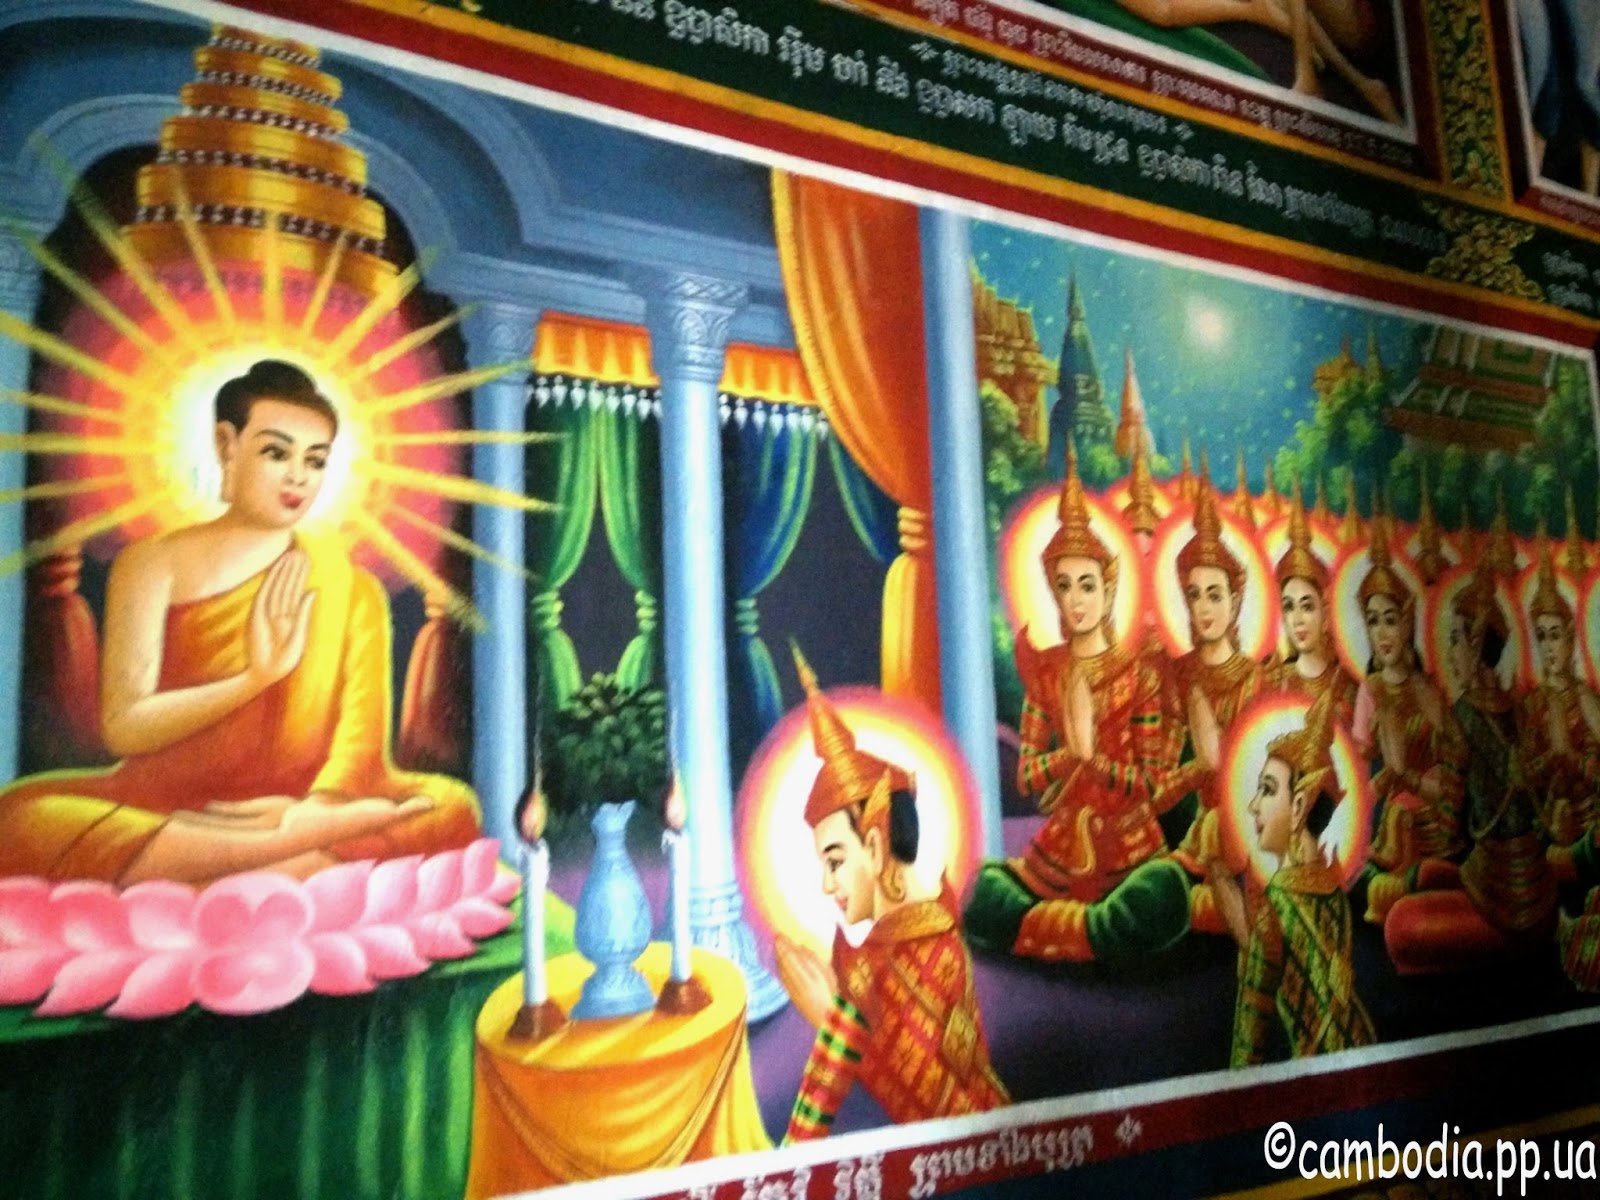 Картина на стене буддиского храма